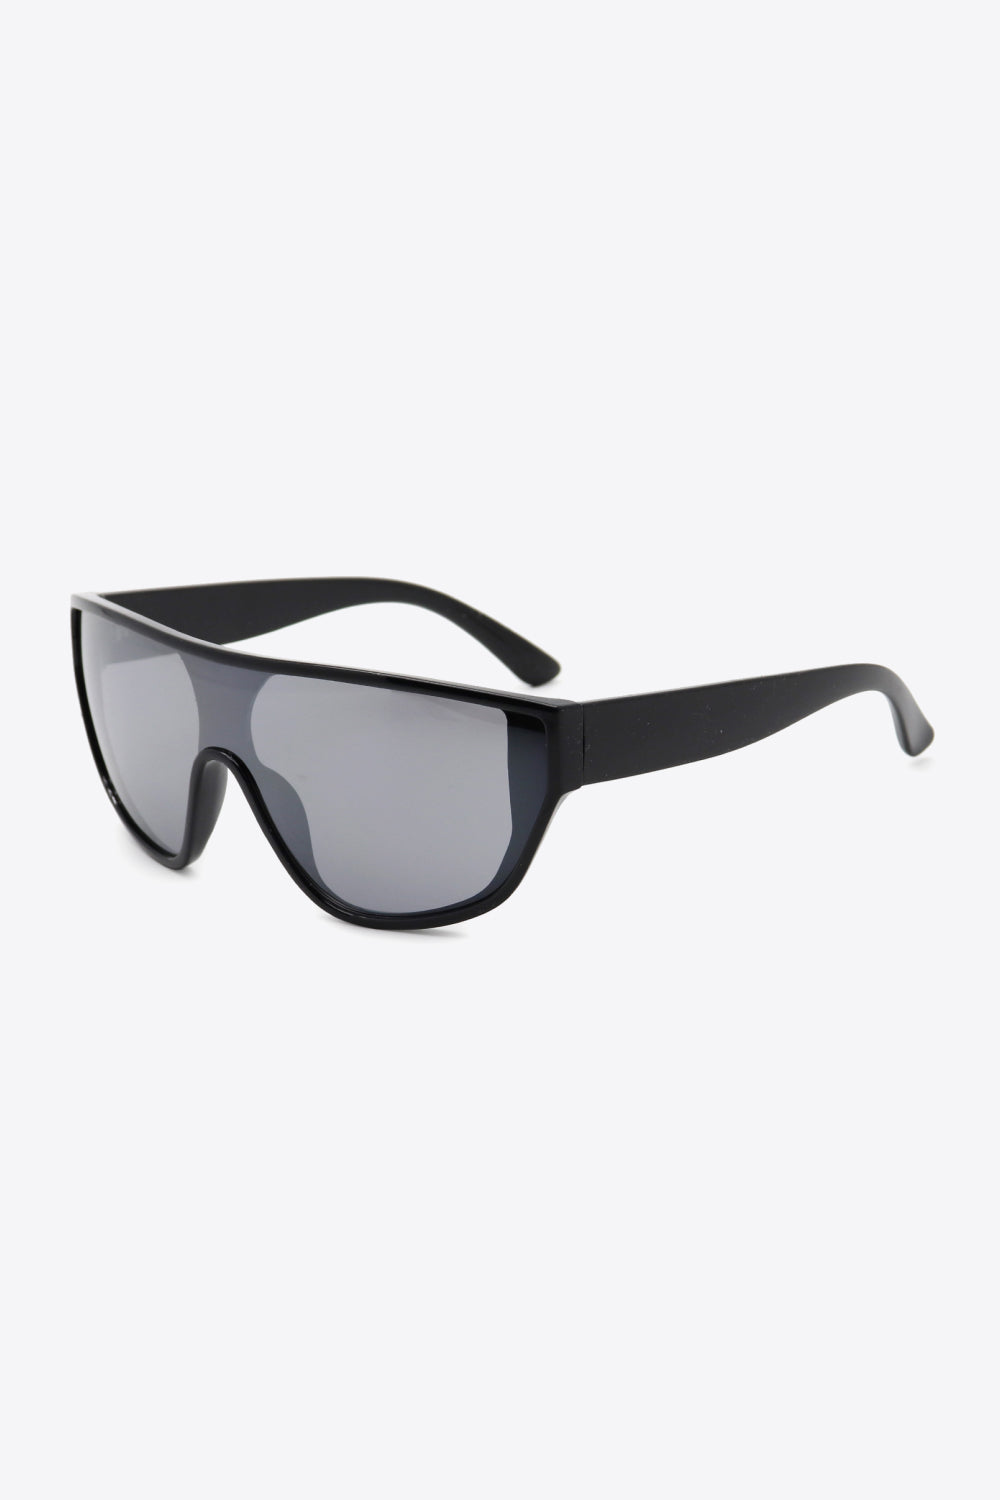 UV400 Polycarbonate Wayfarer Sunglasses Print on any thing USA/STOD clothes